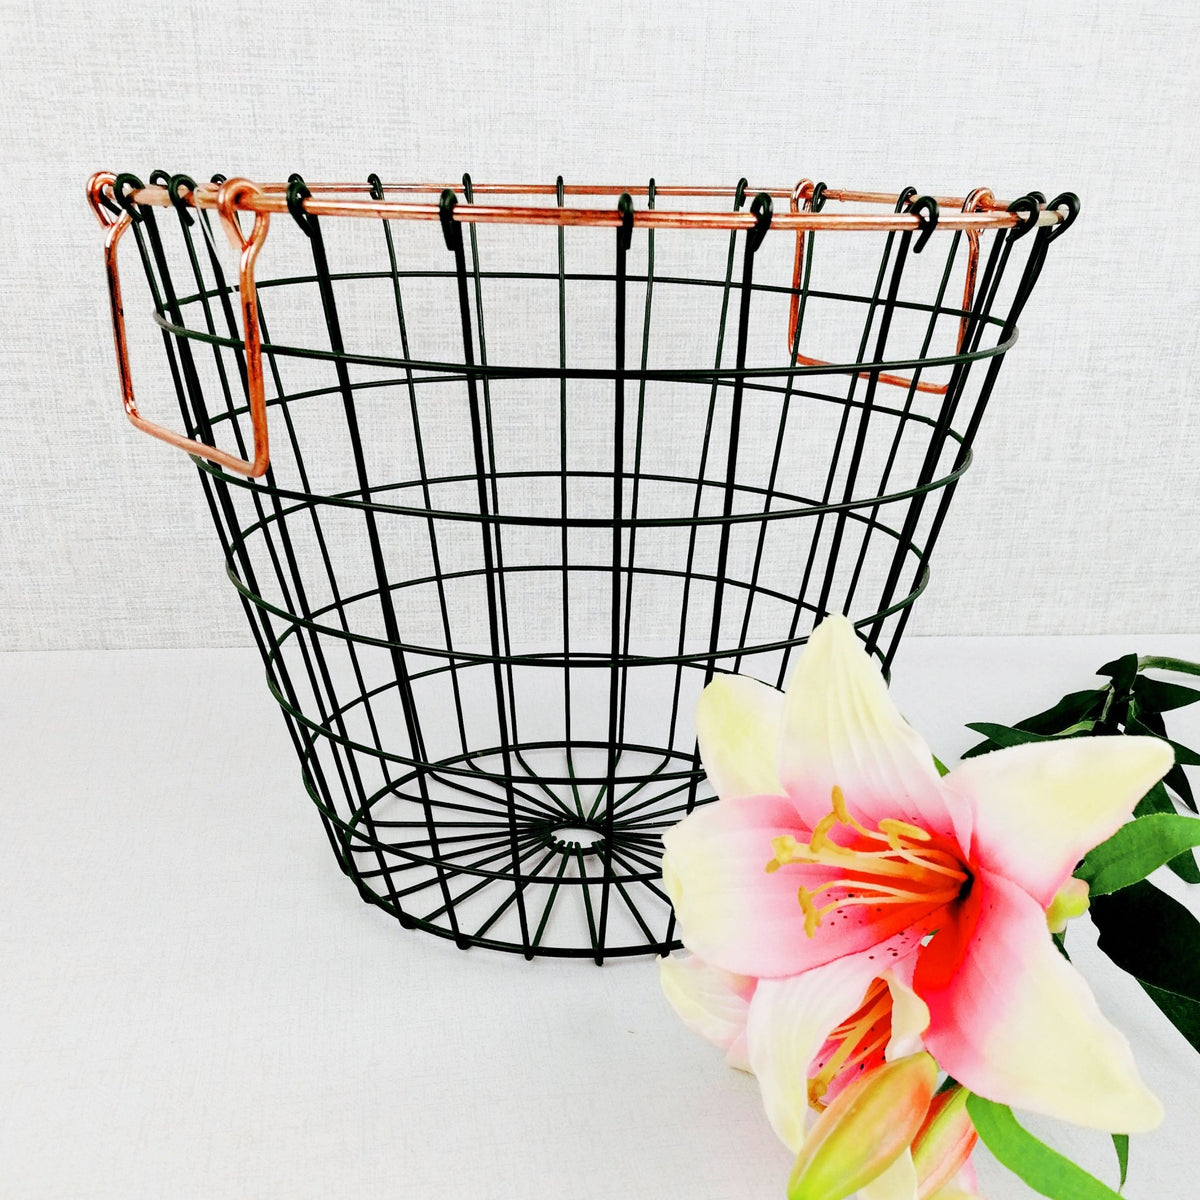 Copper rim basket set with flowers